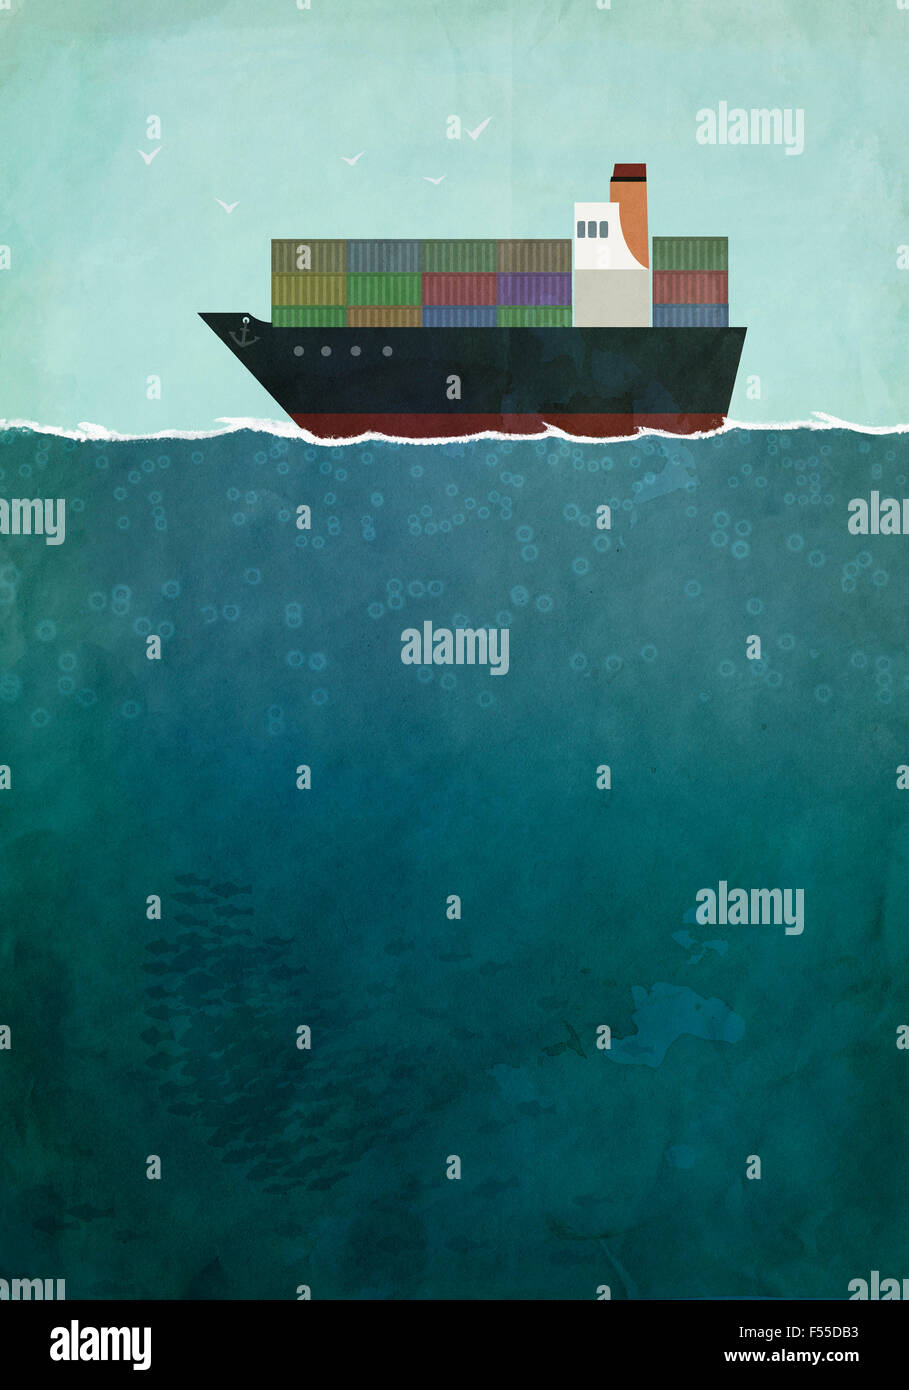 Illustration of cargo ship sailing on sea Stock Photo